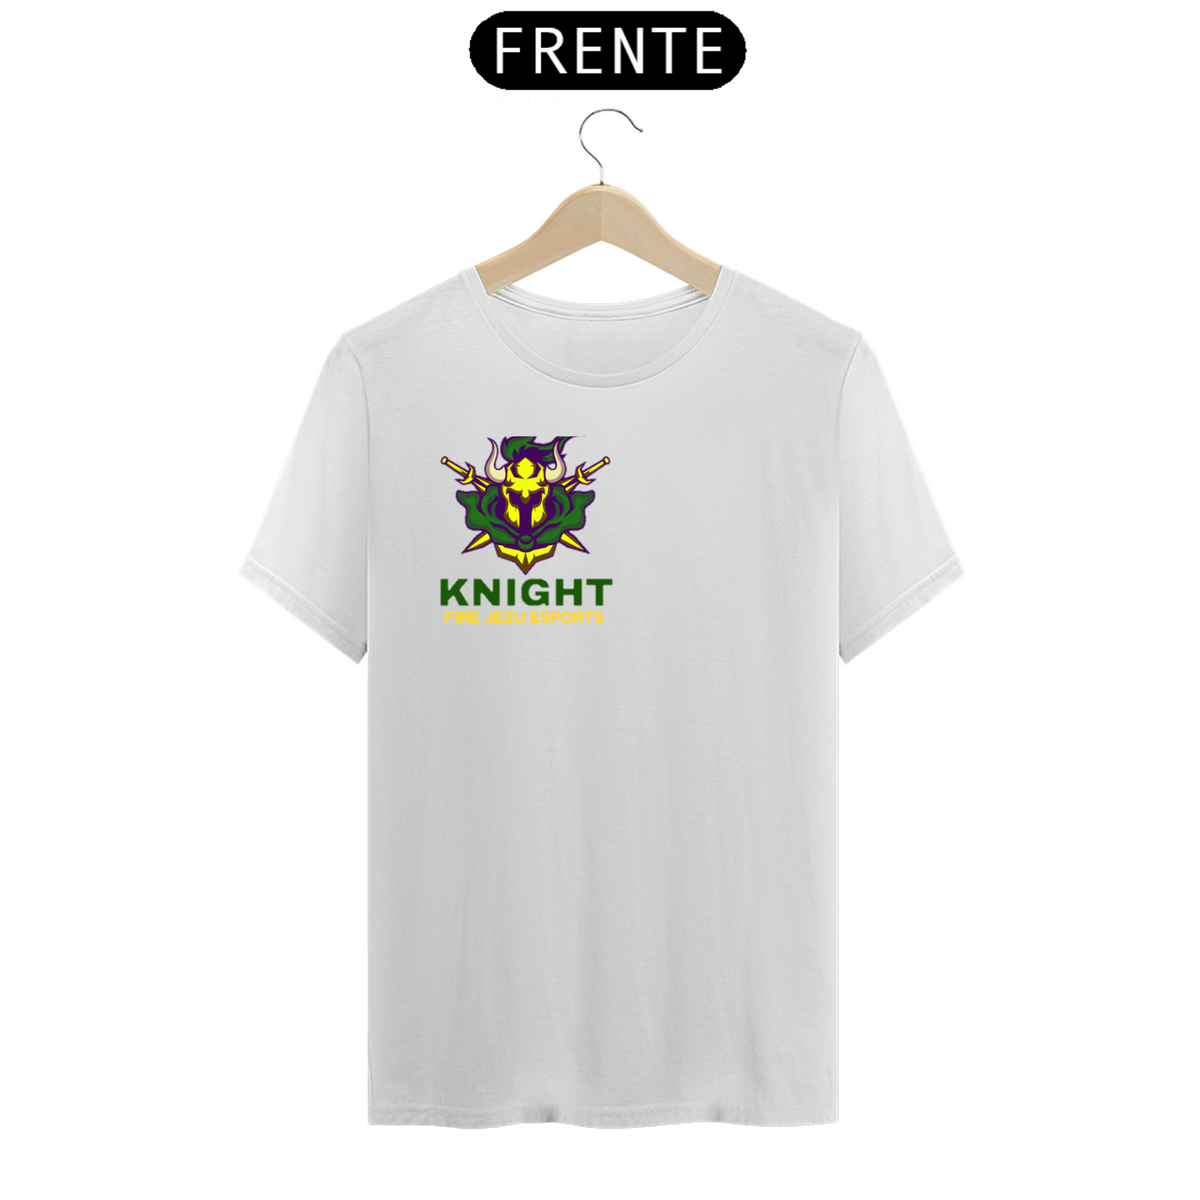 Nome do produto: Knight 